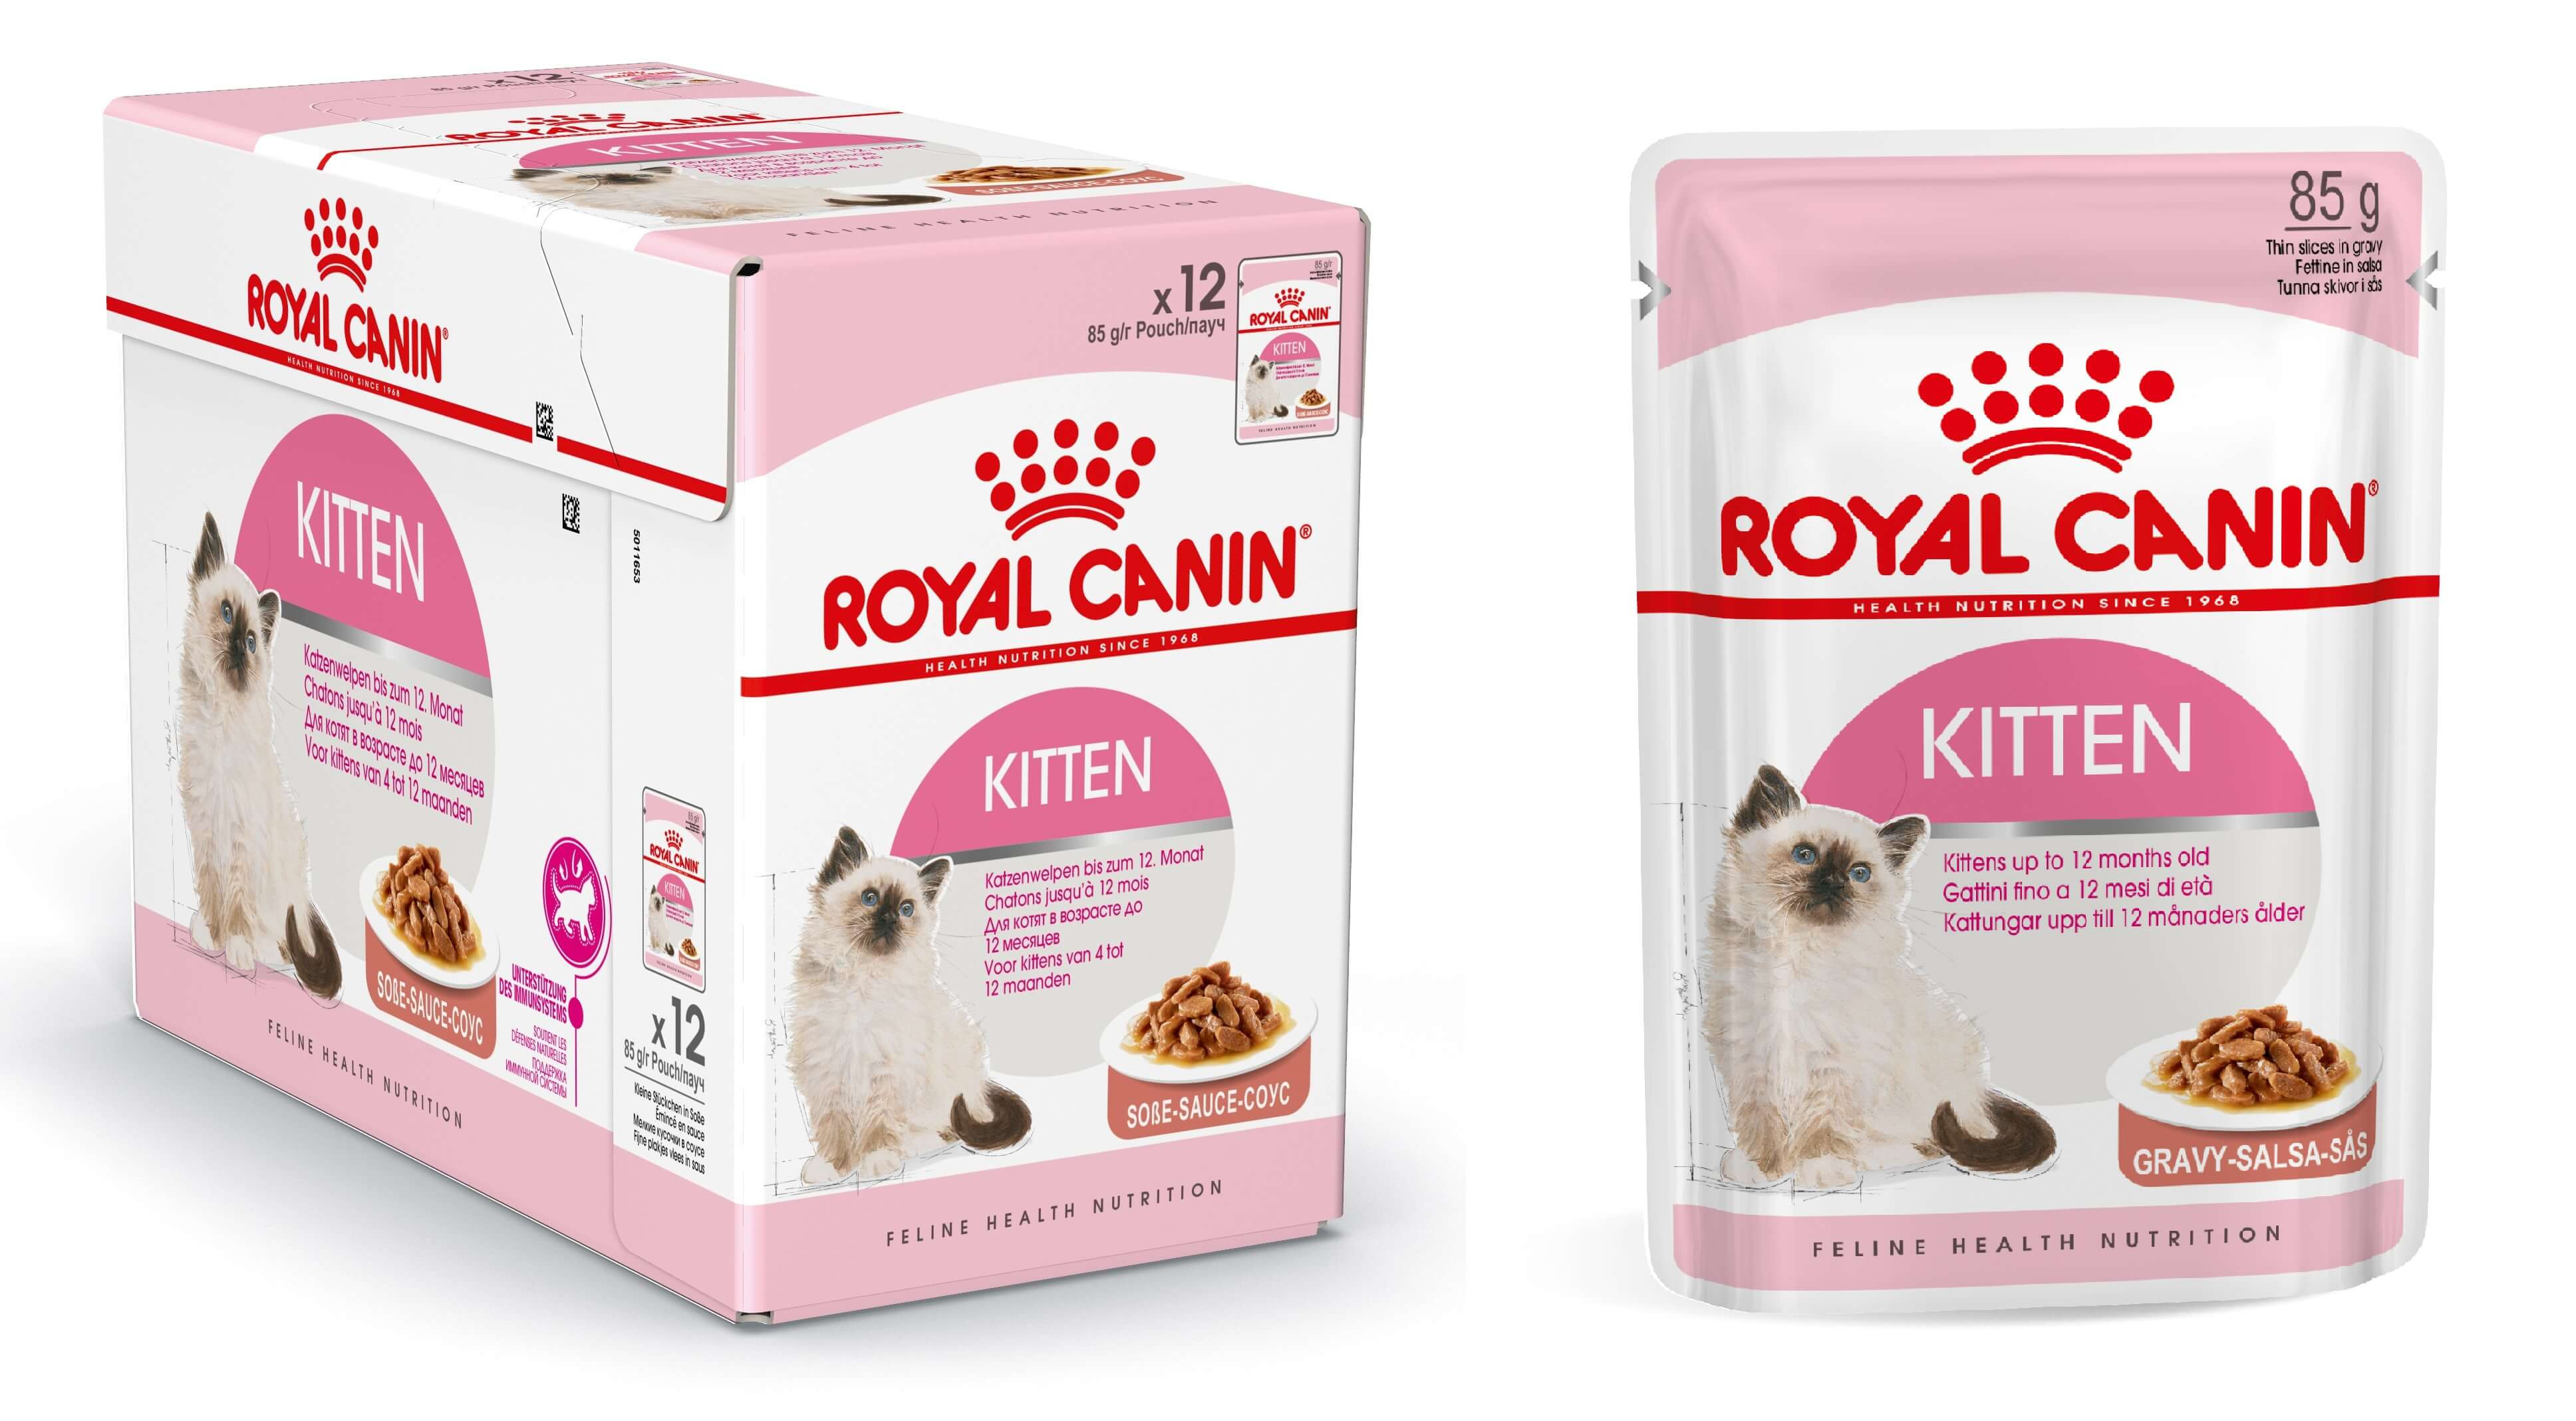 Royal Canin Kitten Katzen-Nassfutter Gelee/Soße 85g